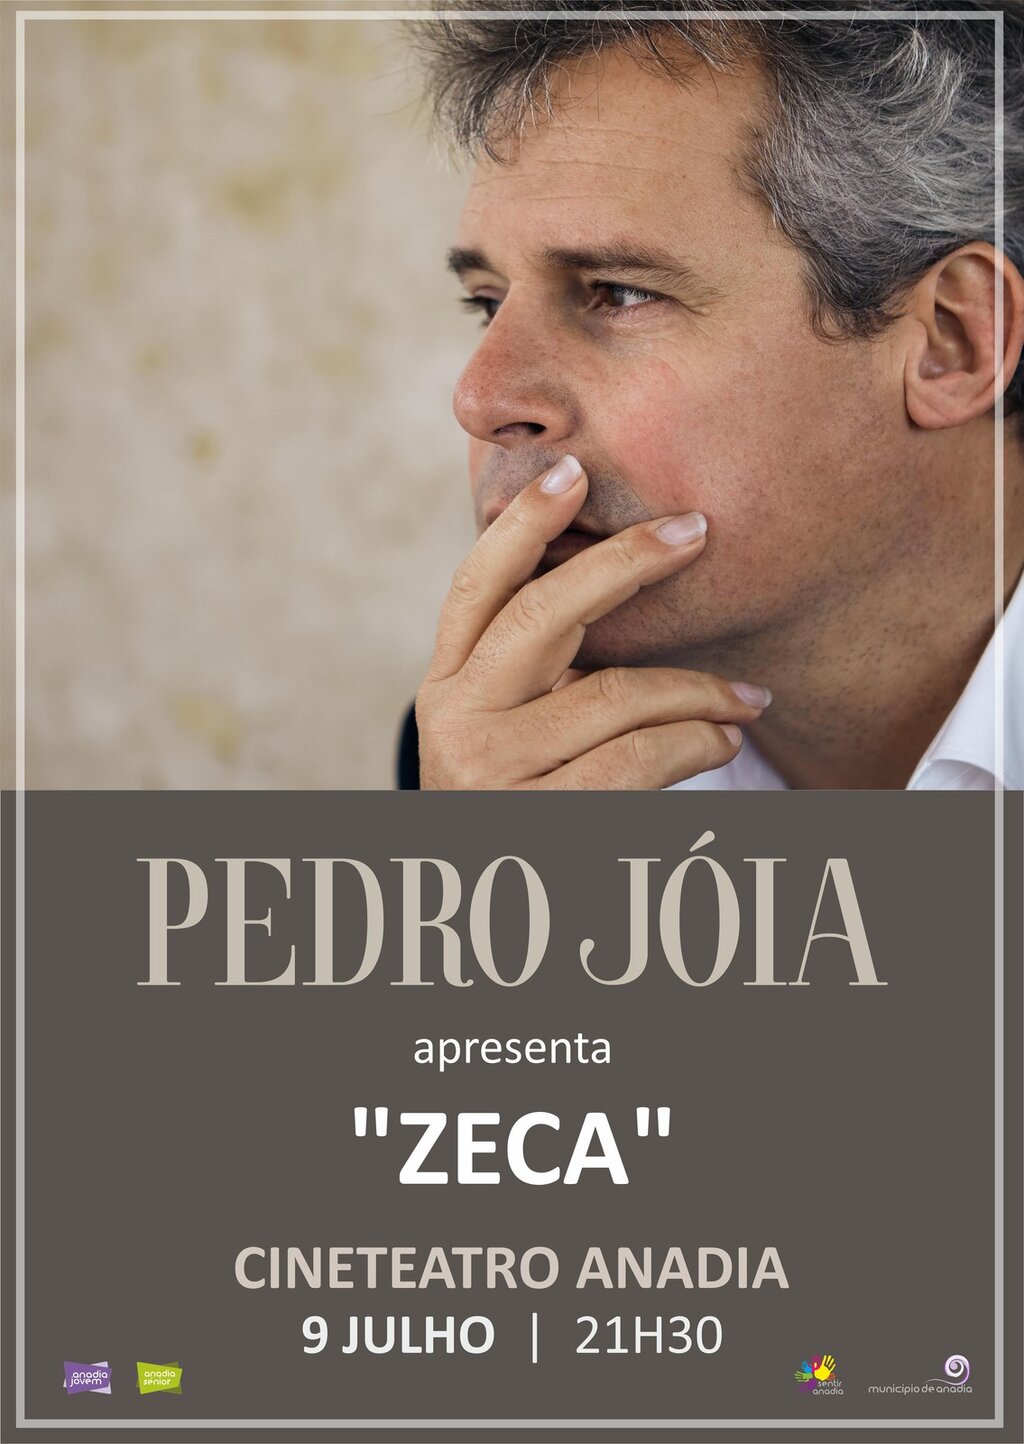 Pedro Jóia apresenta "ZECA"